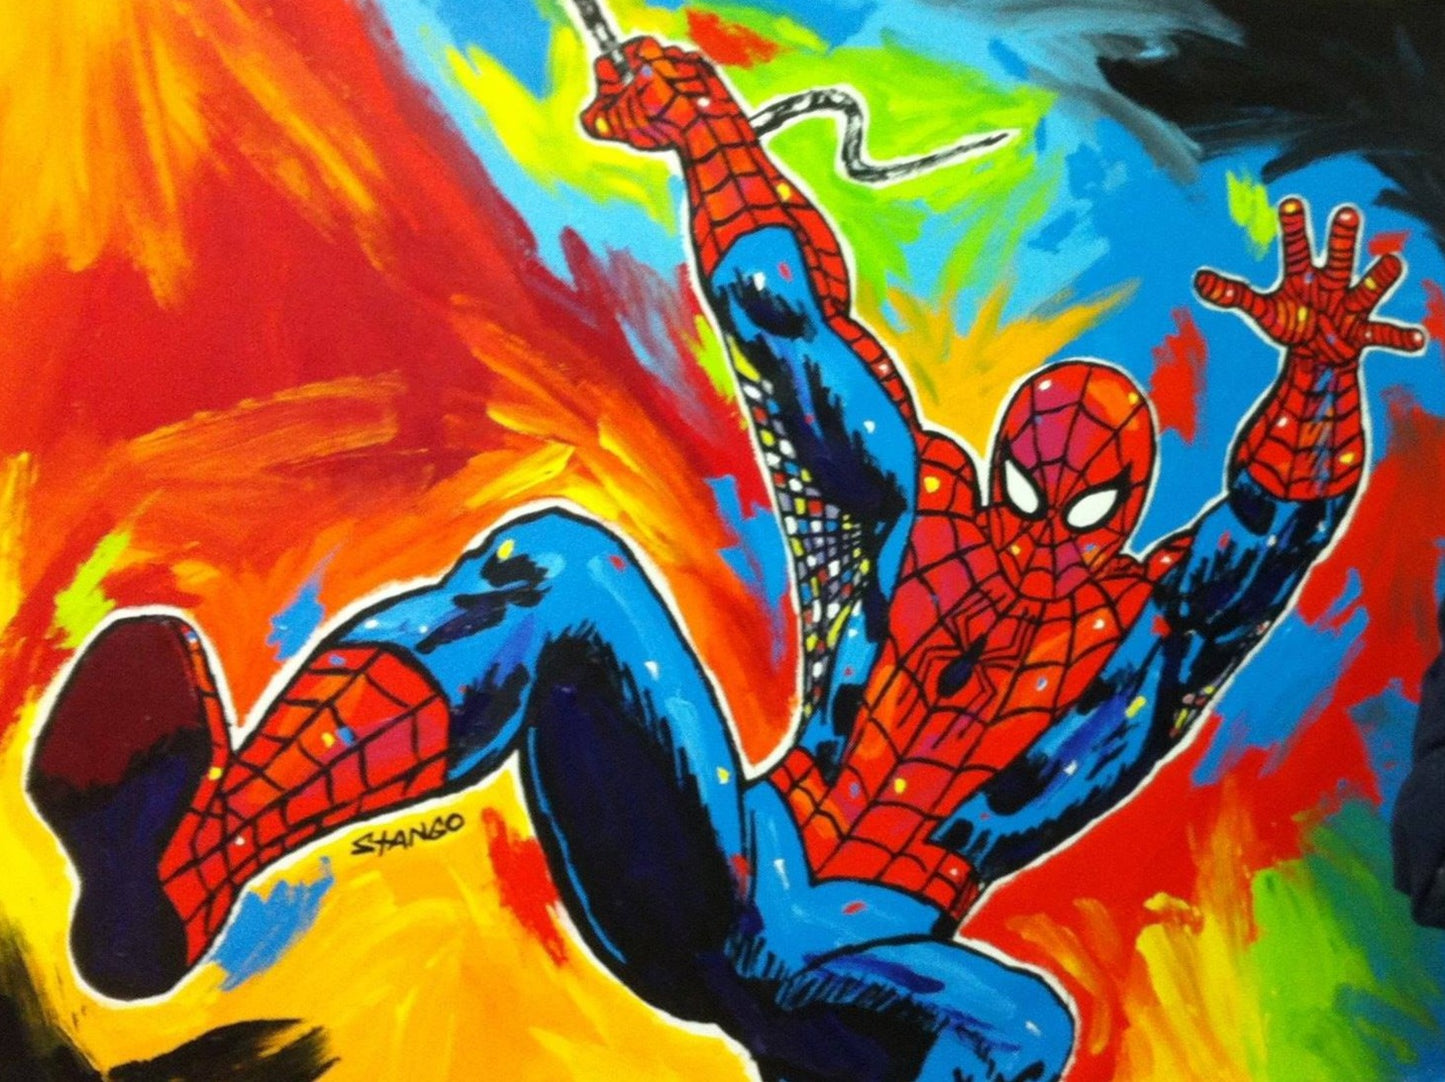 Painting by John Stango | Stango Gallery: American Superhero Spiderman | Spiderman, Spiderman | USA Patriotic Artist | Washington, DC |